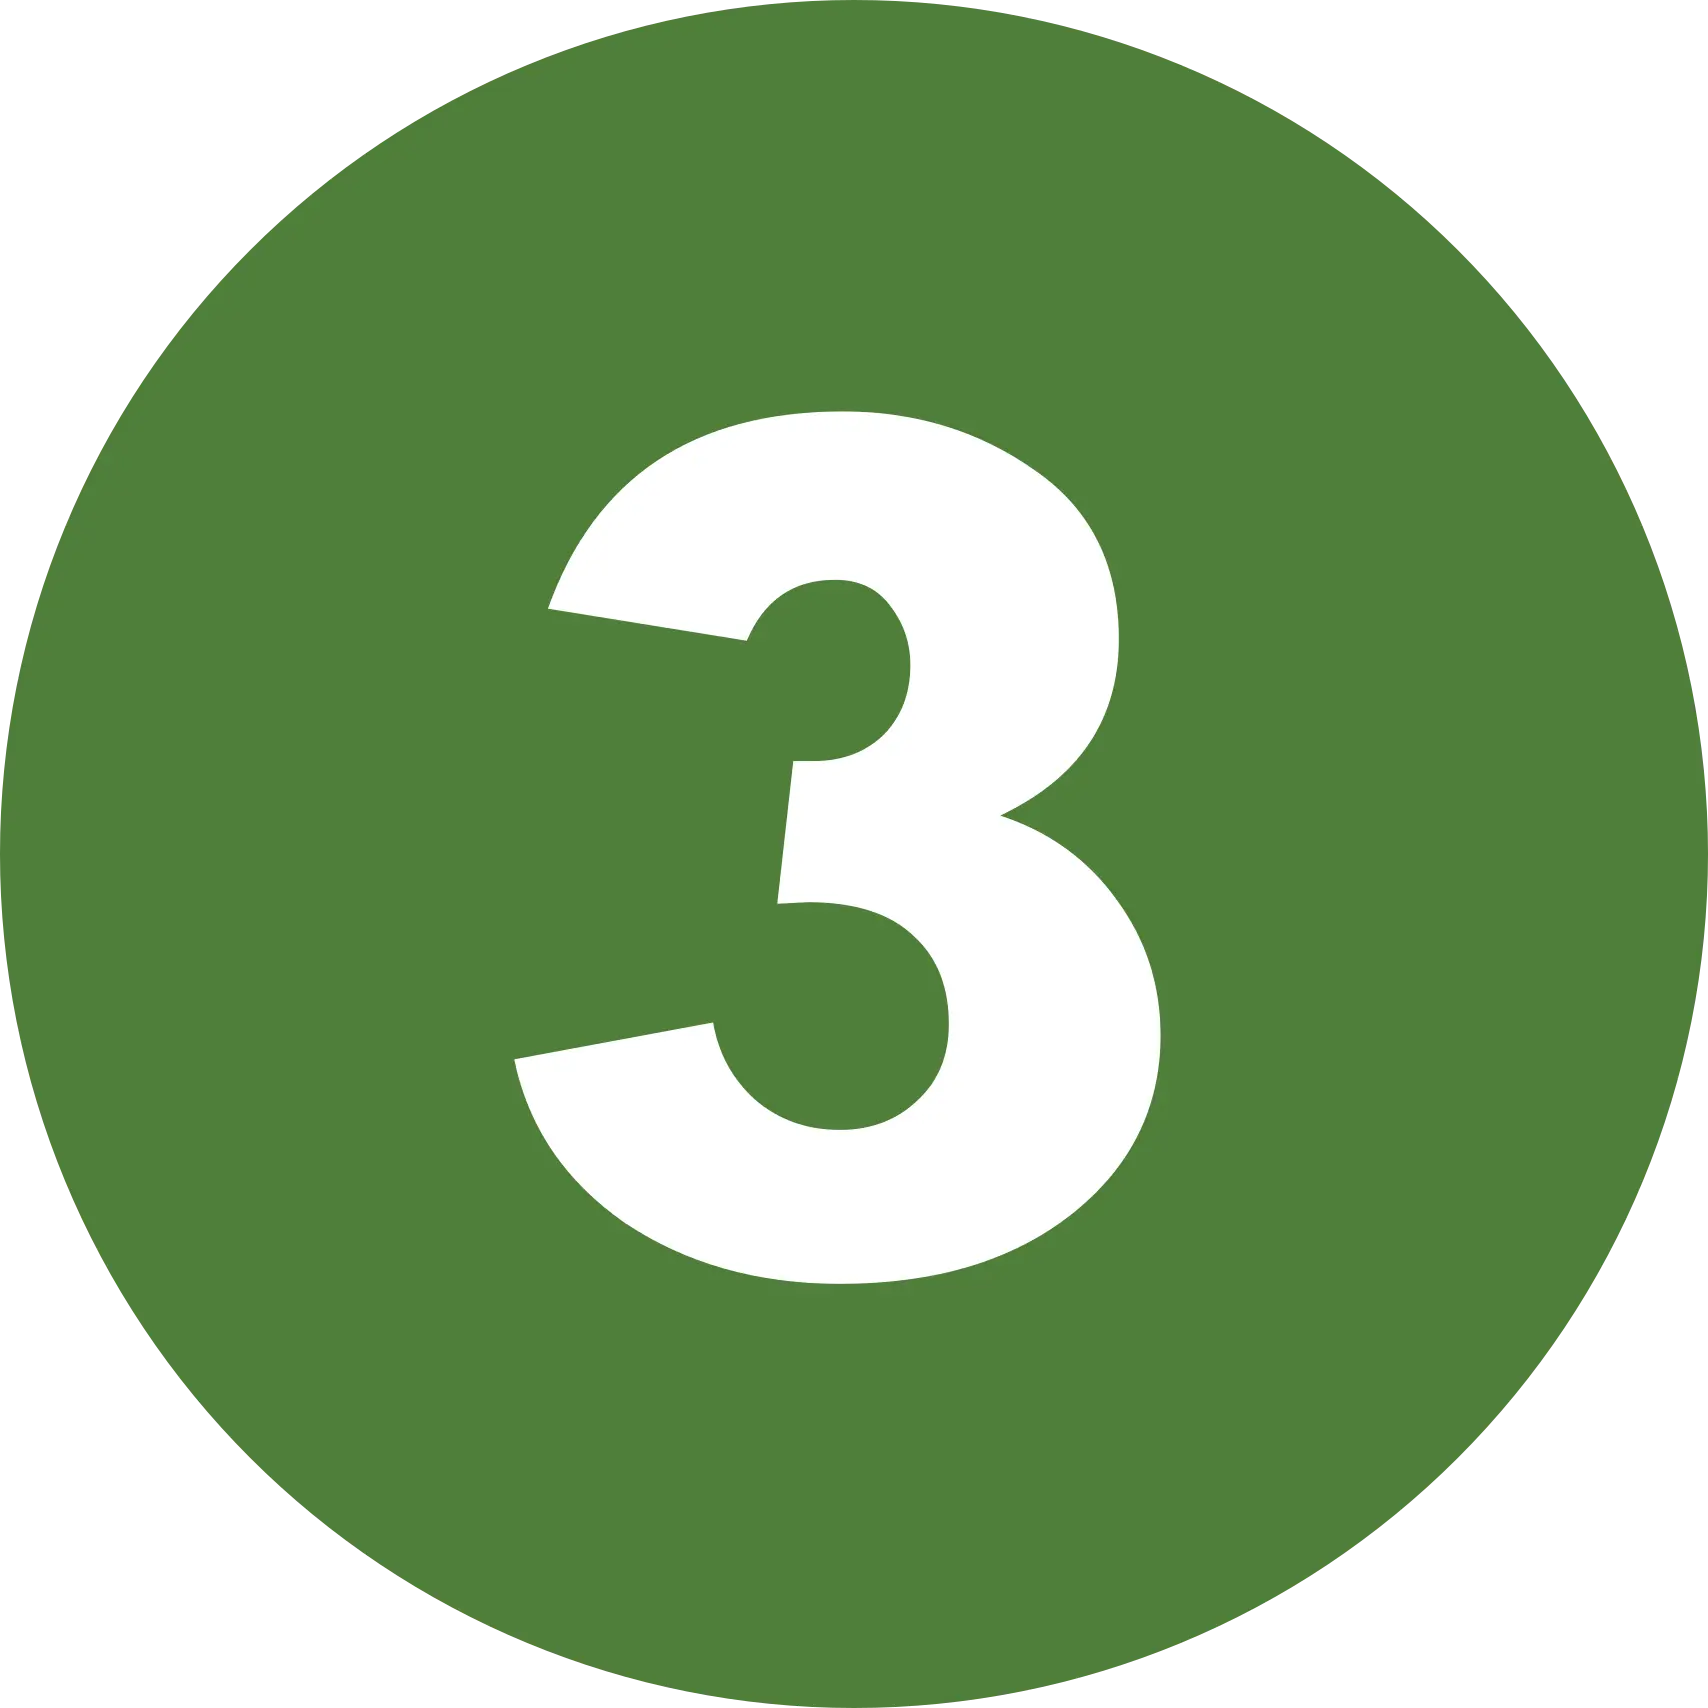 3 green